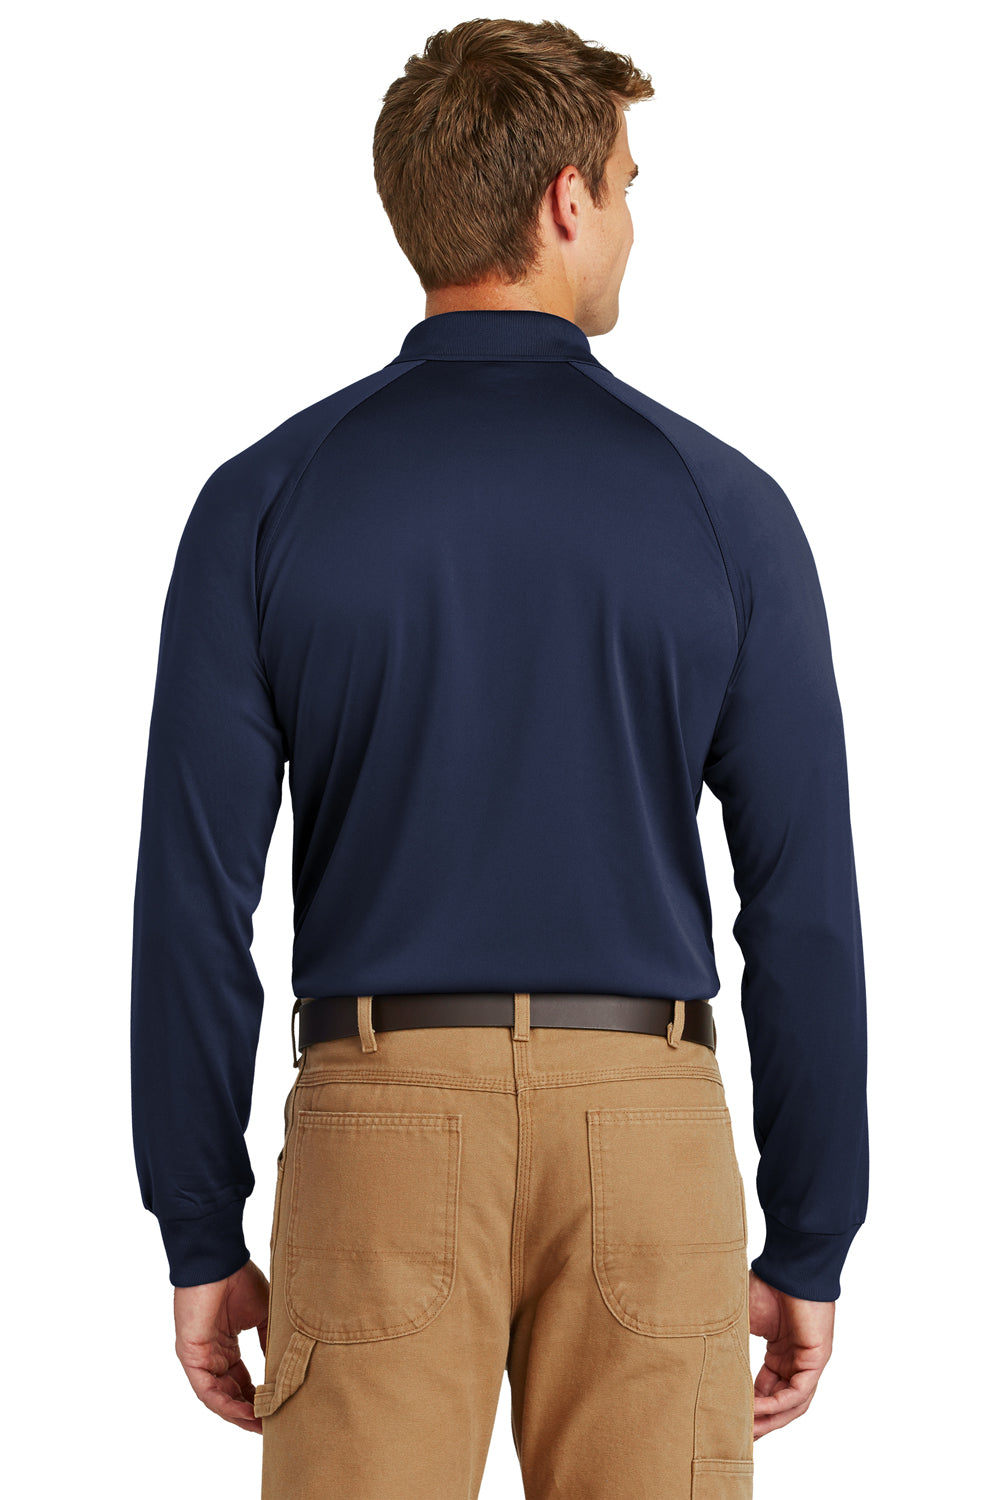 CornerStone CS410LS Mens Select Tactical Moisture Wicking Long Sleeve Polo Shirt Navy Blue Back